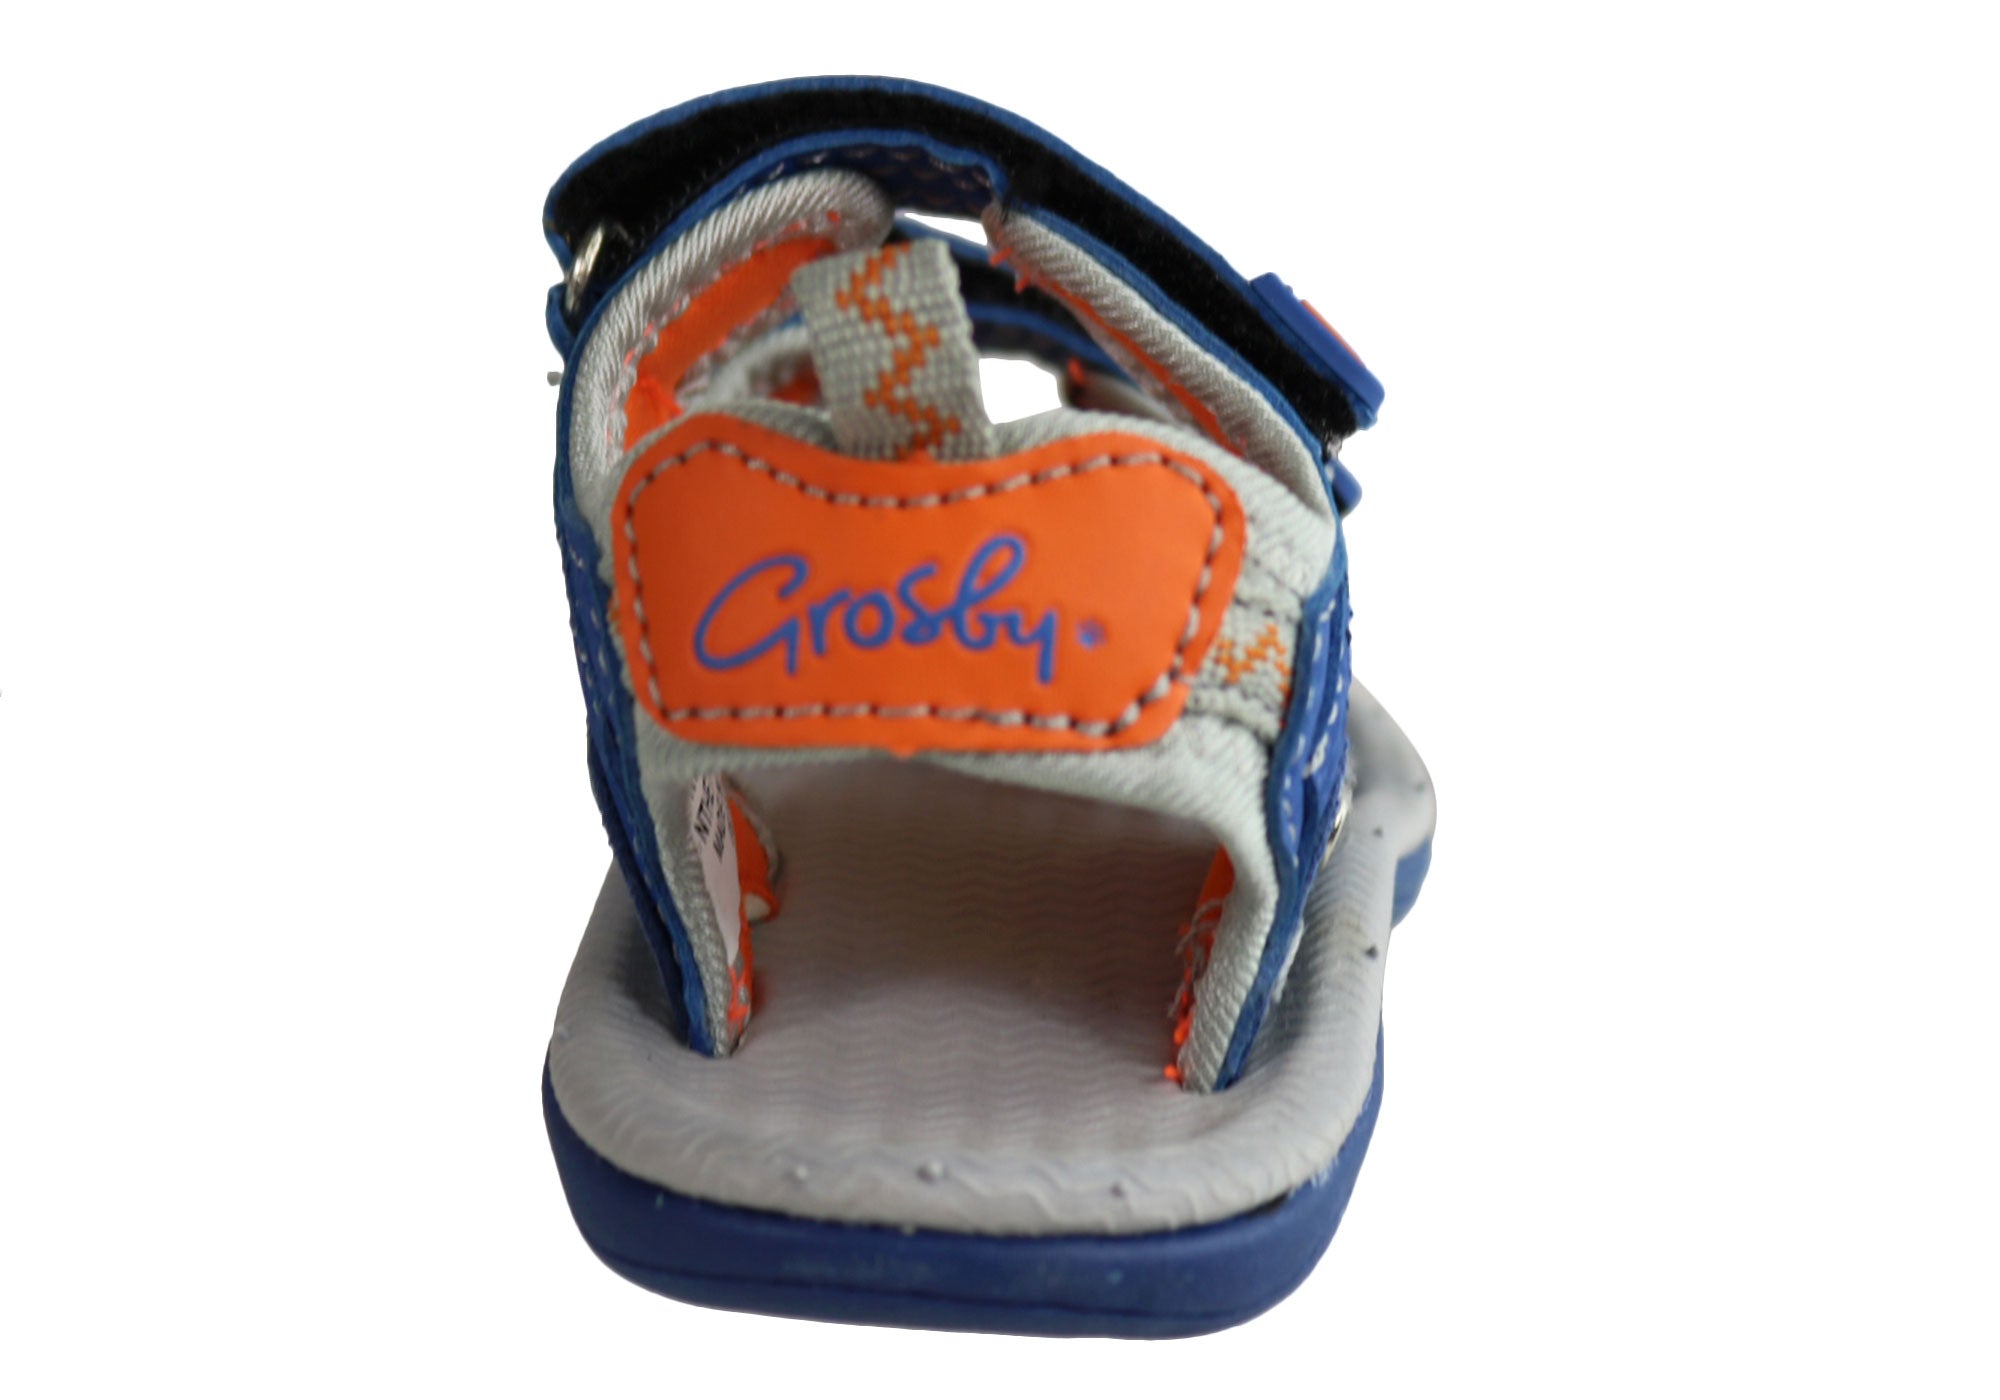 Grosby Keegs Infant Toddler Kids Comfortable Adjustable Sandals